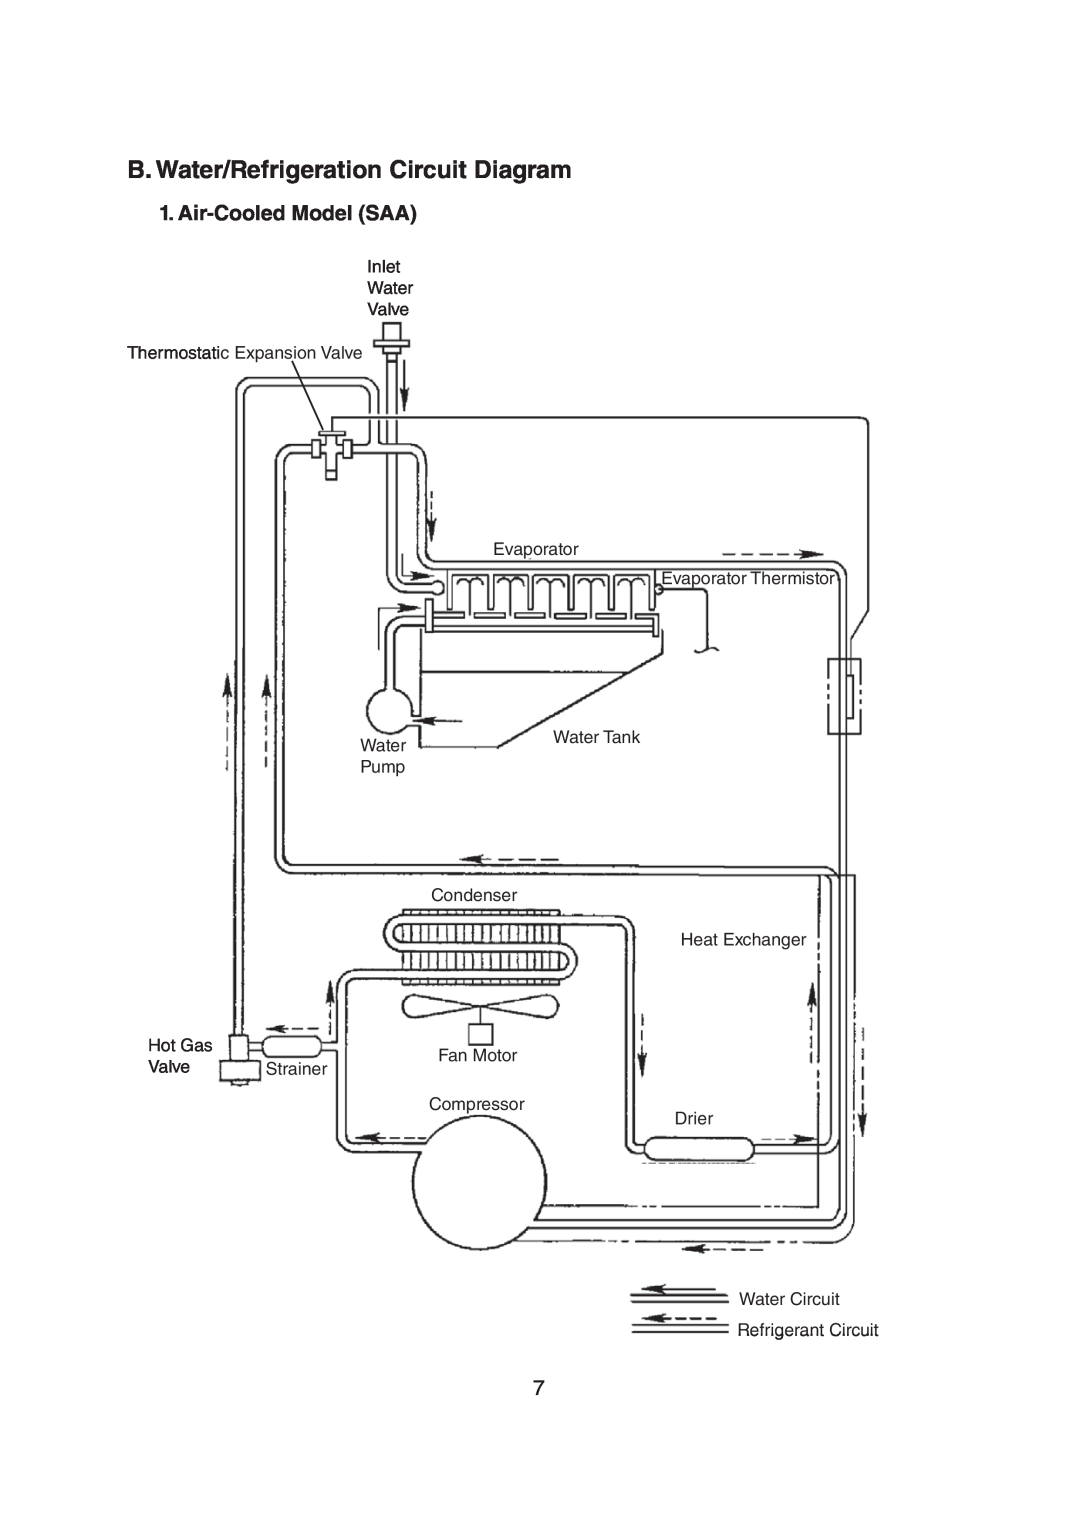 Hoshizaki M029-897 service manual B. Water/Refrigeration Circuit Diagram, Air-Cooled Model SAA, Water Tank 